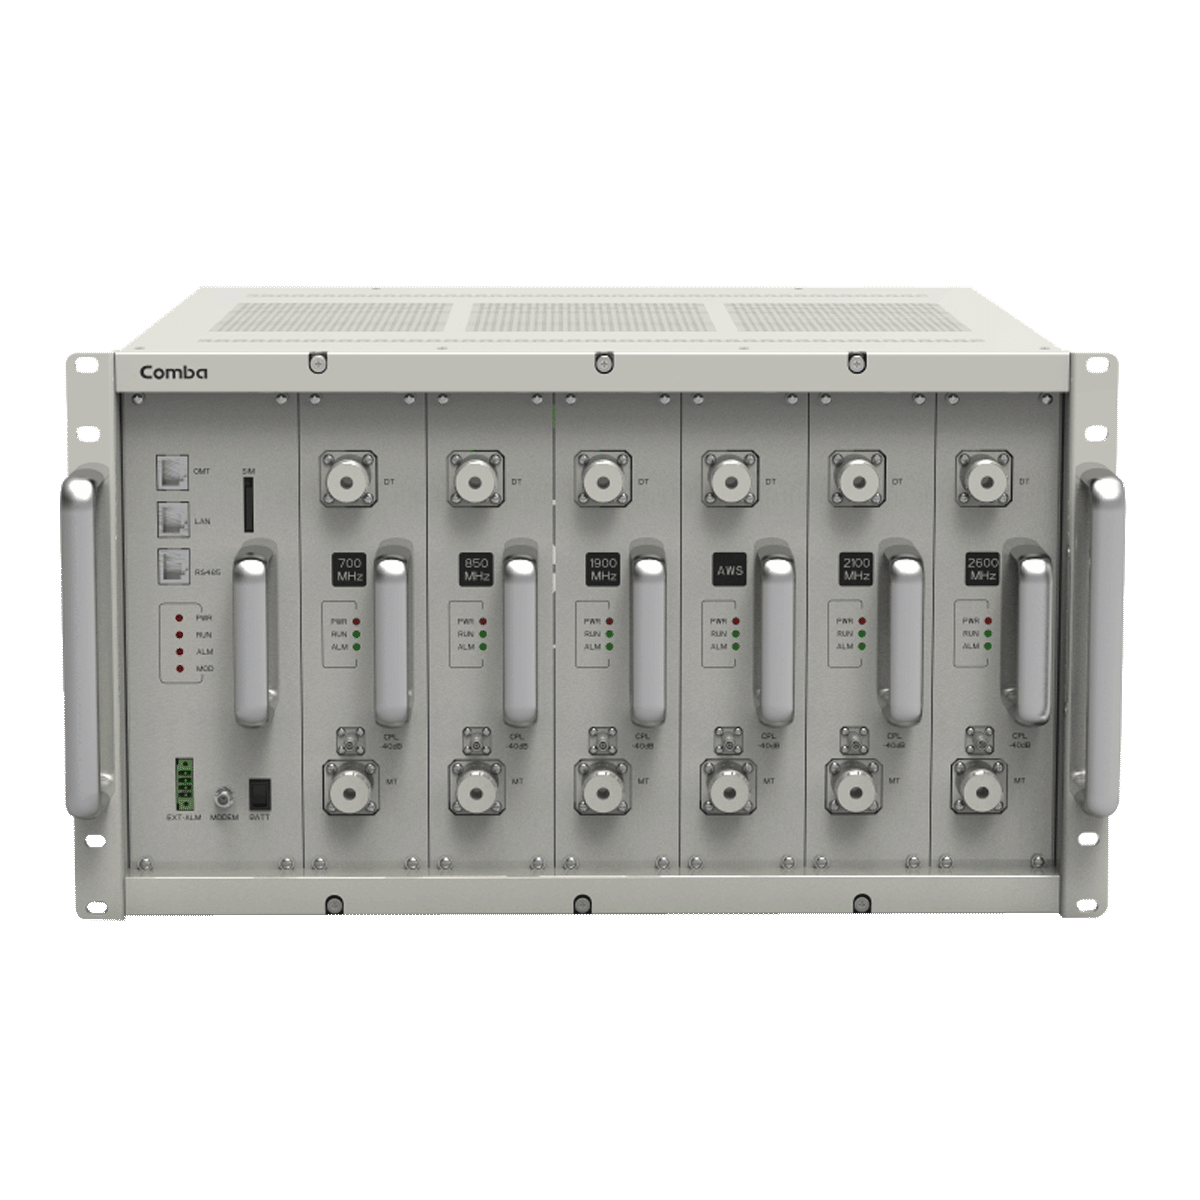 Original Image: Comba – mBDA Power and Monitor Unit, 110/220VAC, Ethernet adaptor